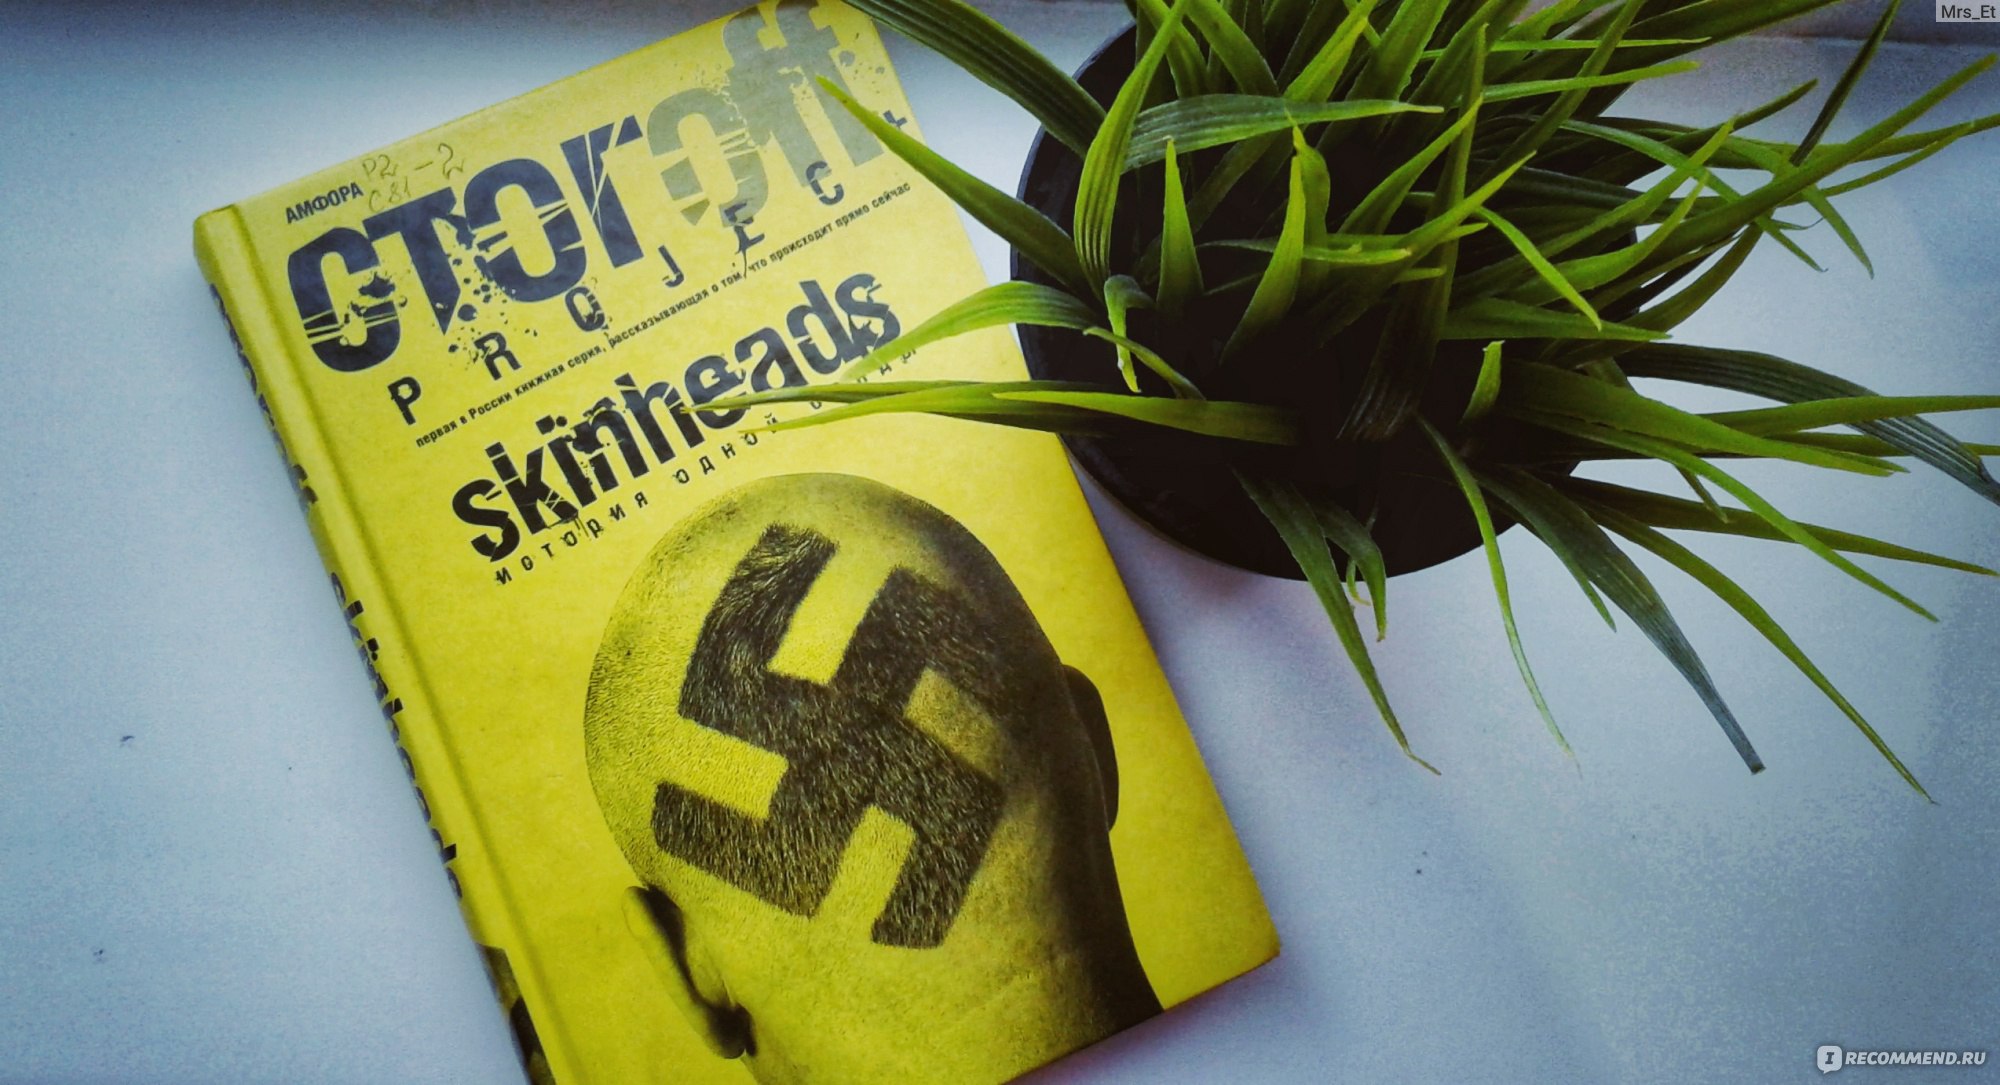 Skinheads история одной банды. Белые шнурки книга. История одной банды книга.